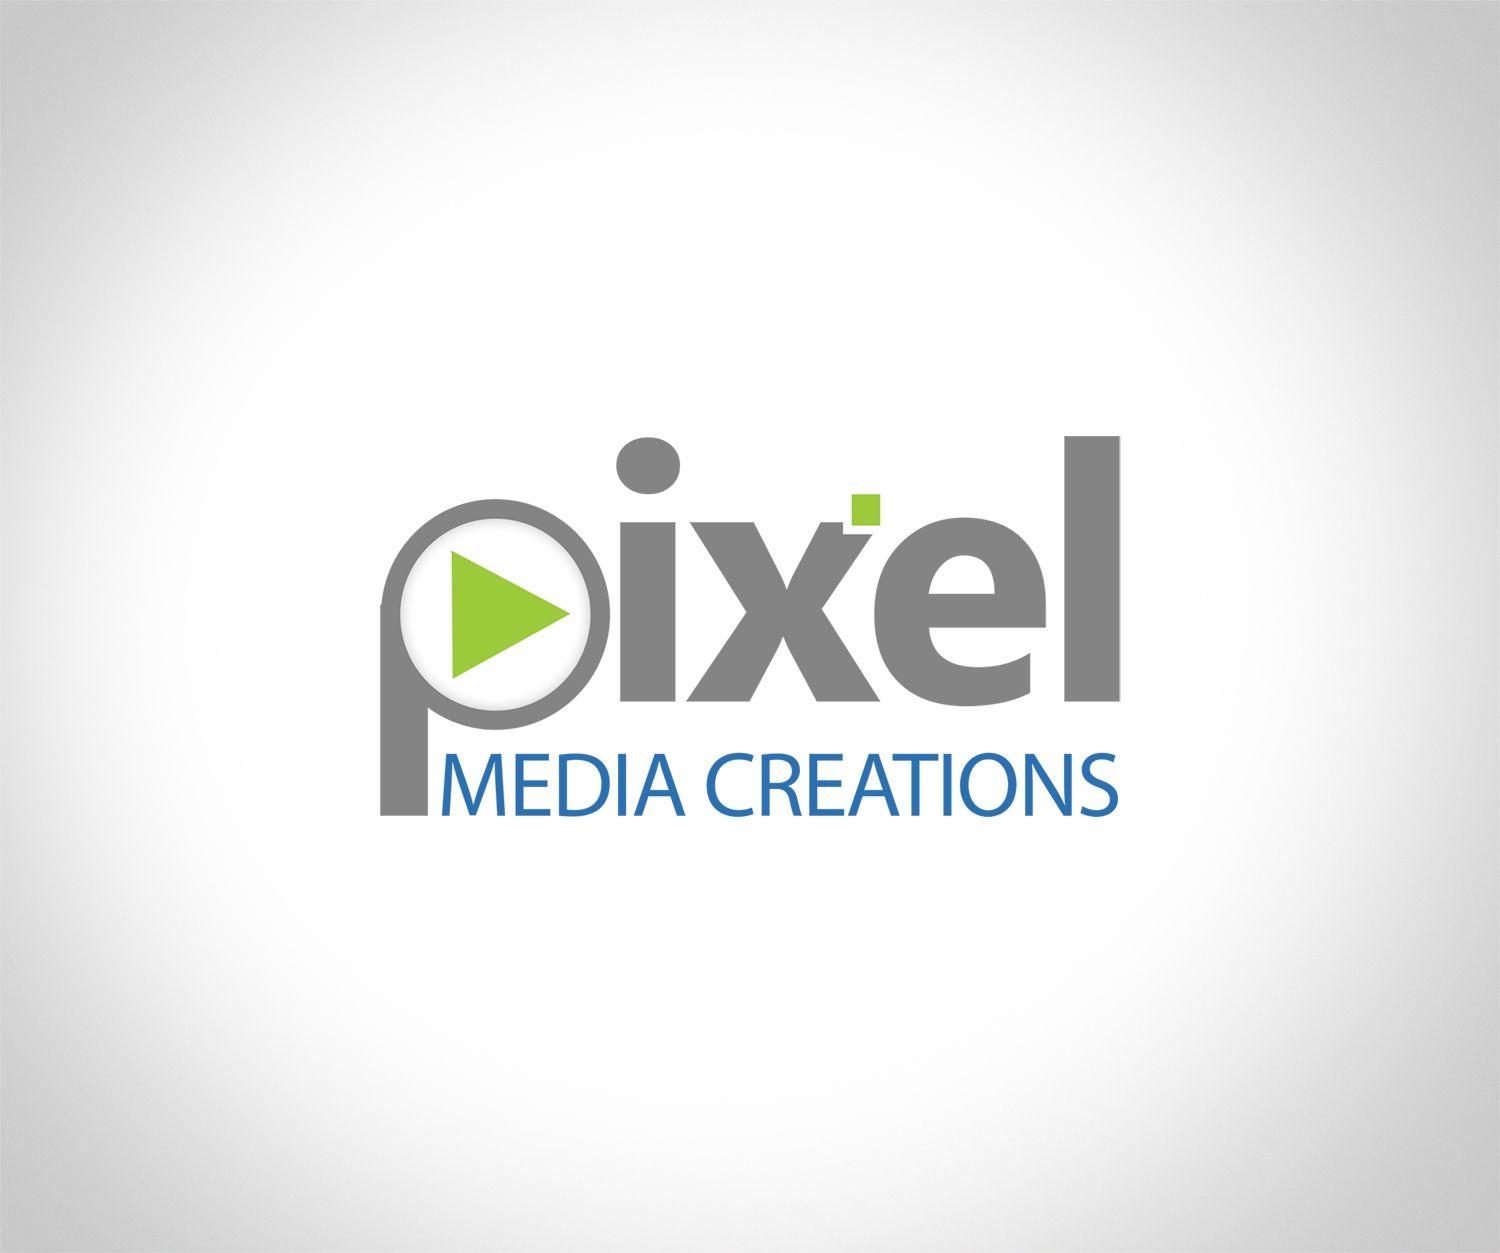 Australian Based Media Company Logo - Modern, Professional, It Company Logo Design for Pixel Media